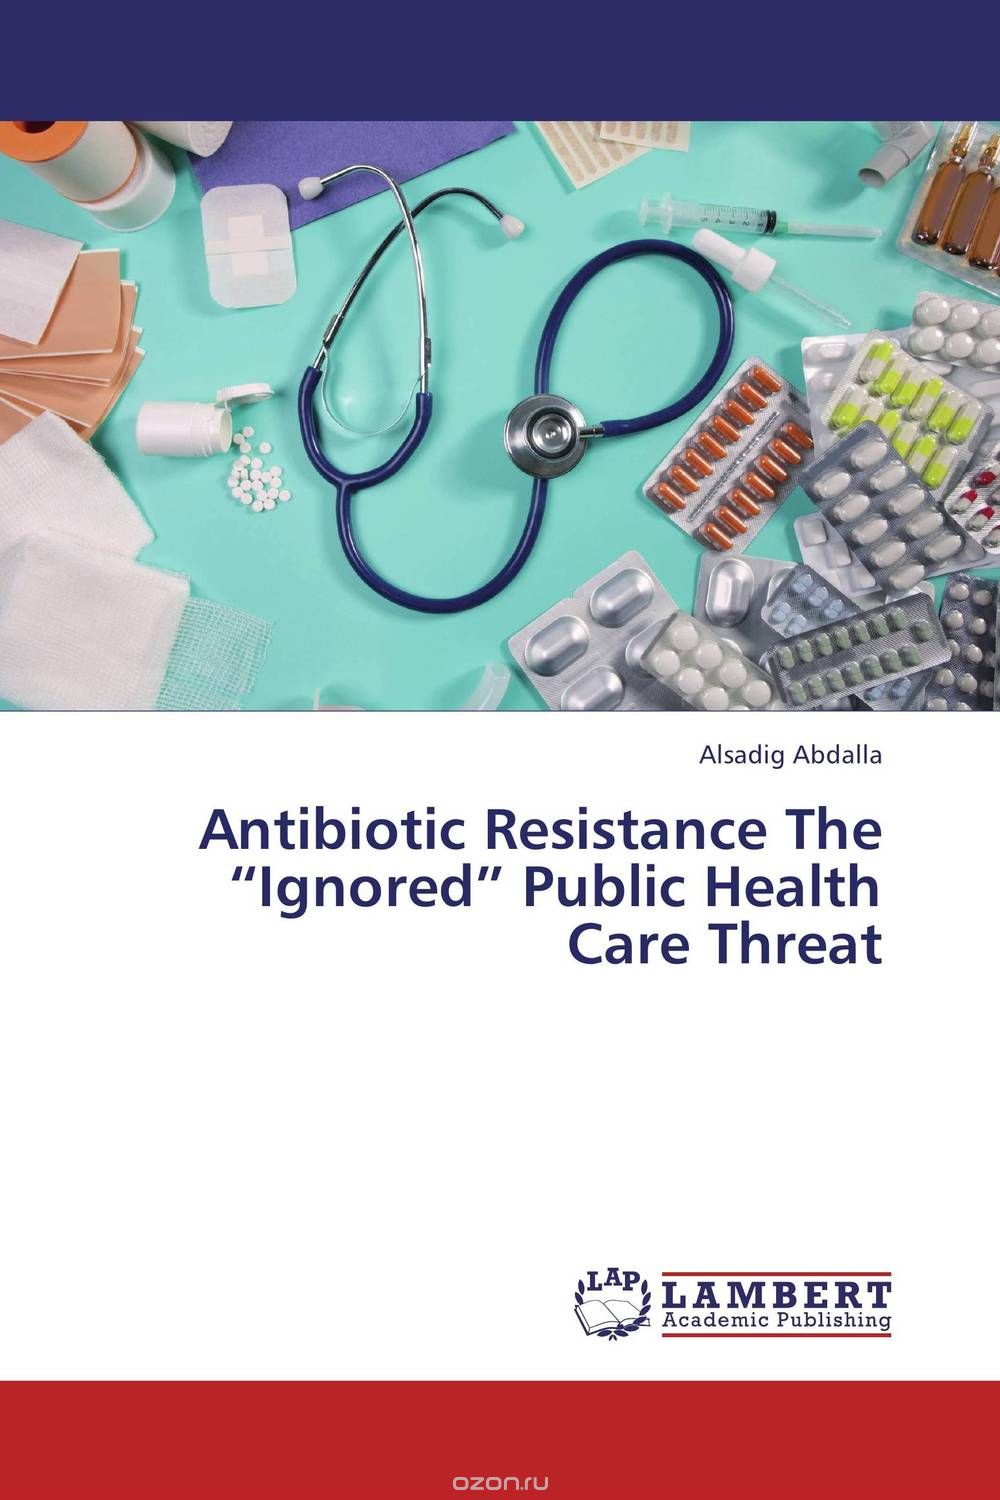 Скачать книгу "Antibiotic Resistance The “Ignored” Public Health Care Threat"